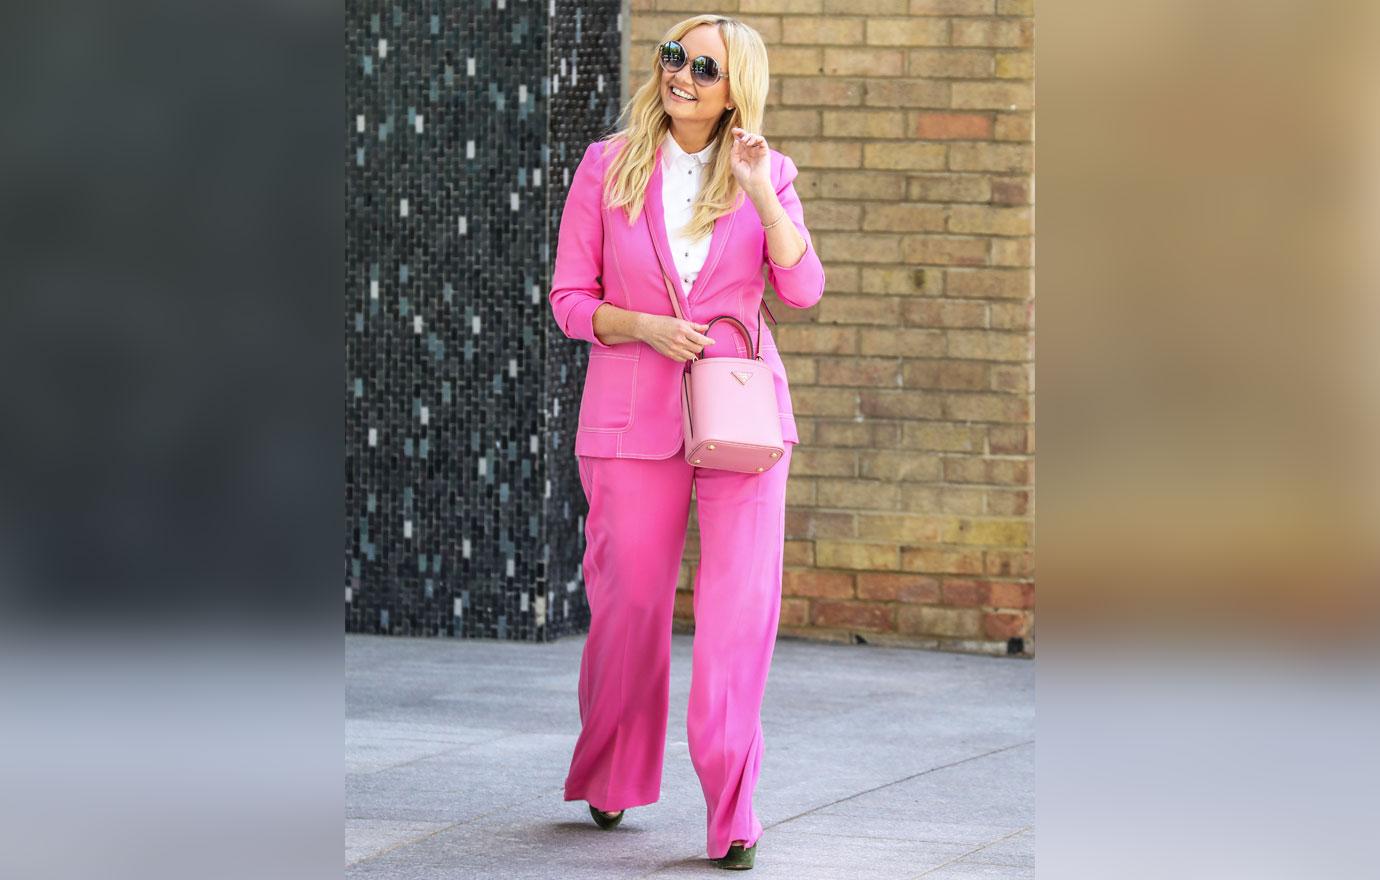 Spice Girls Member Emma Bunton Wears Pink Power Suit: Photos